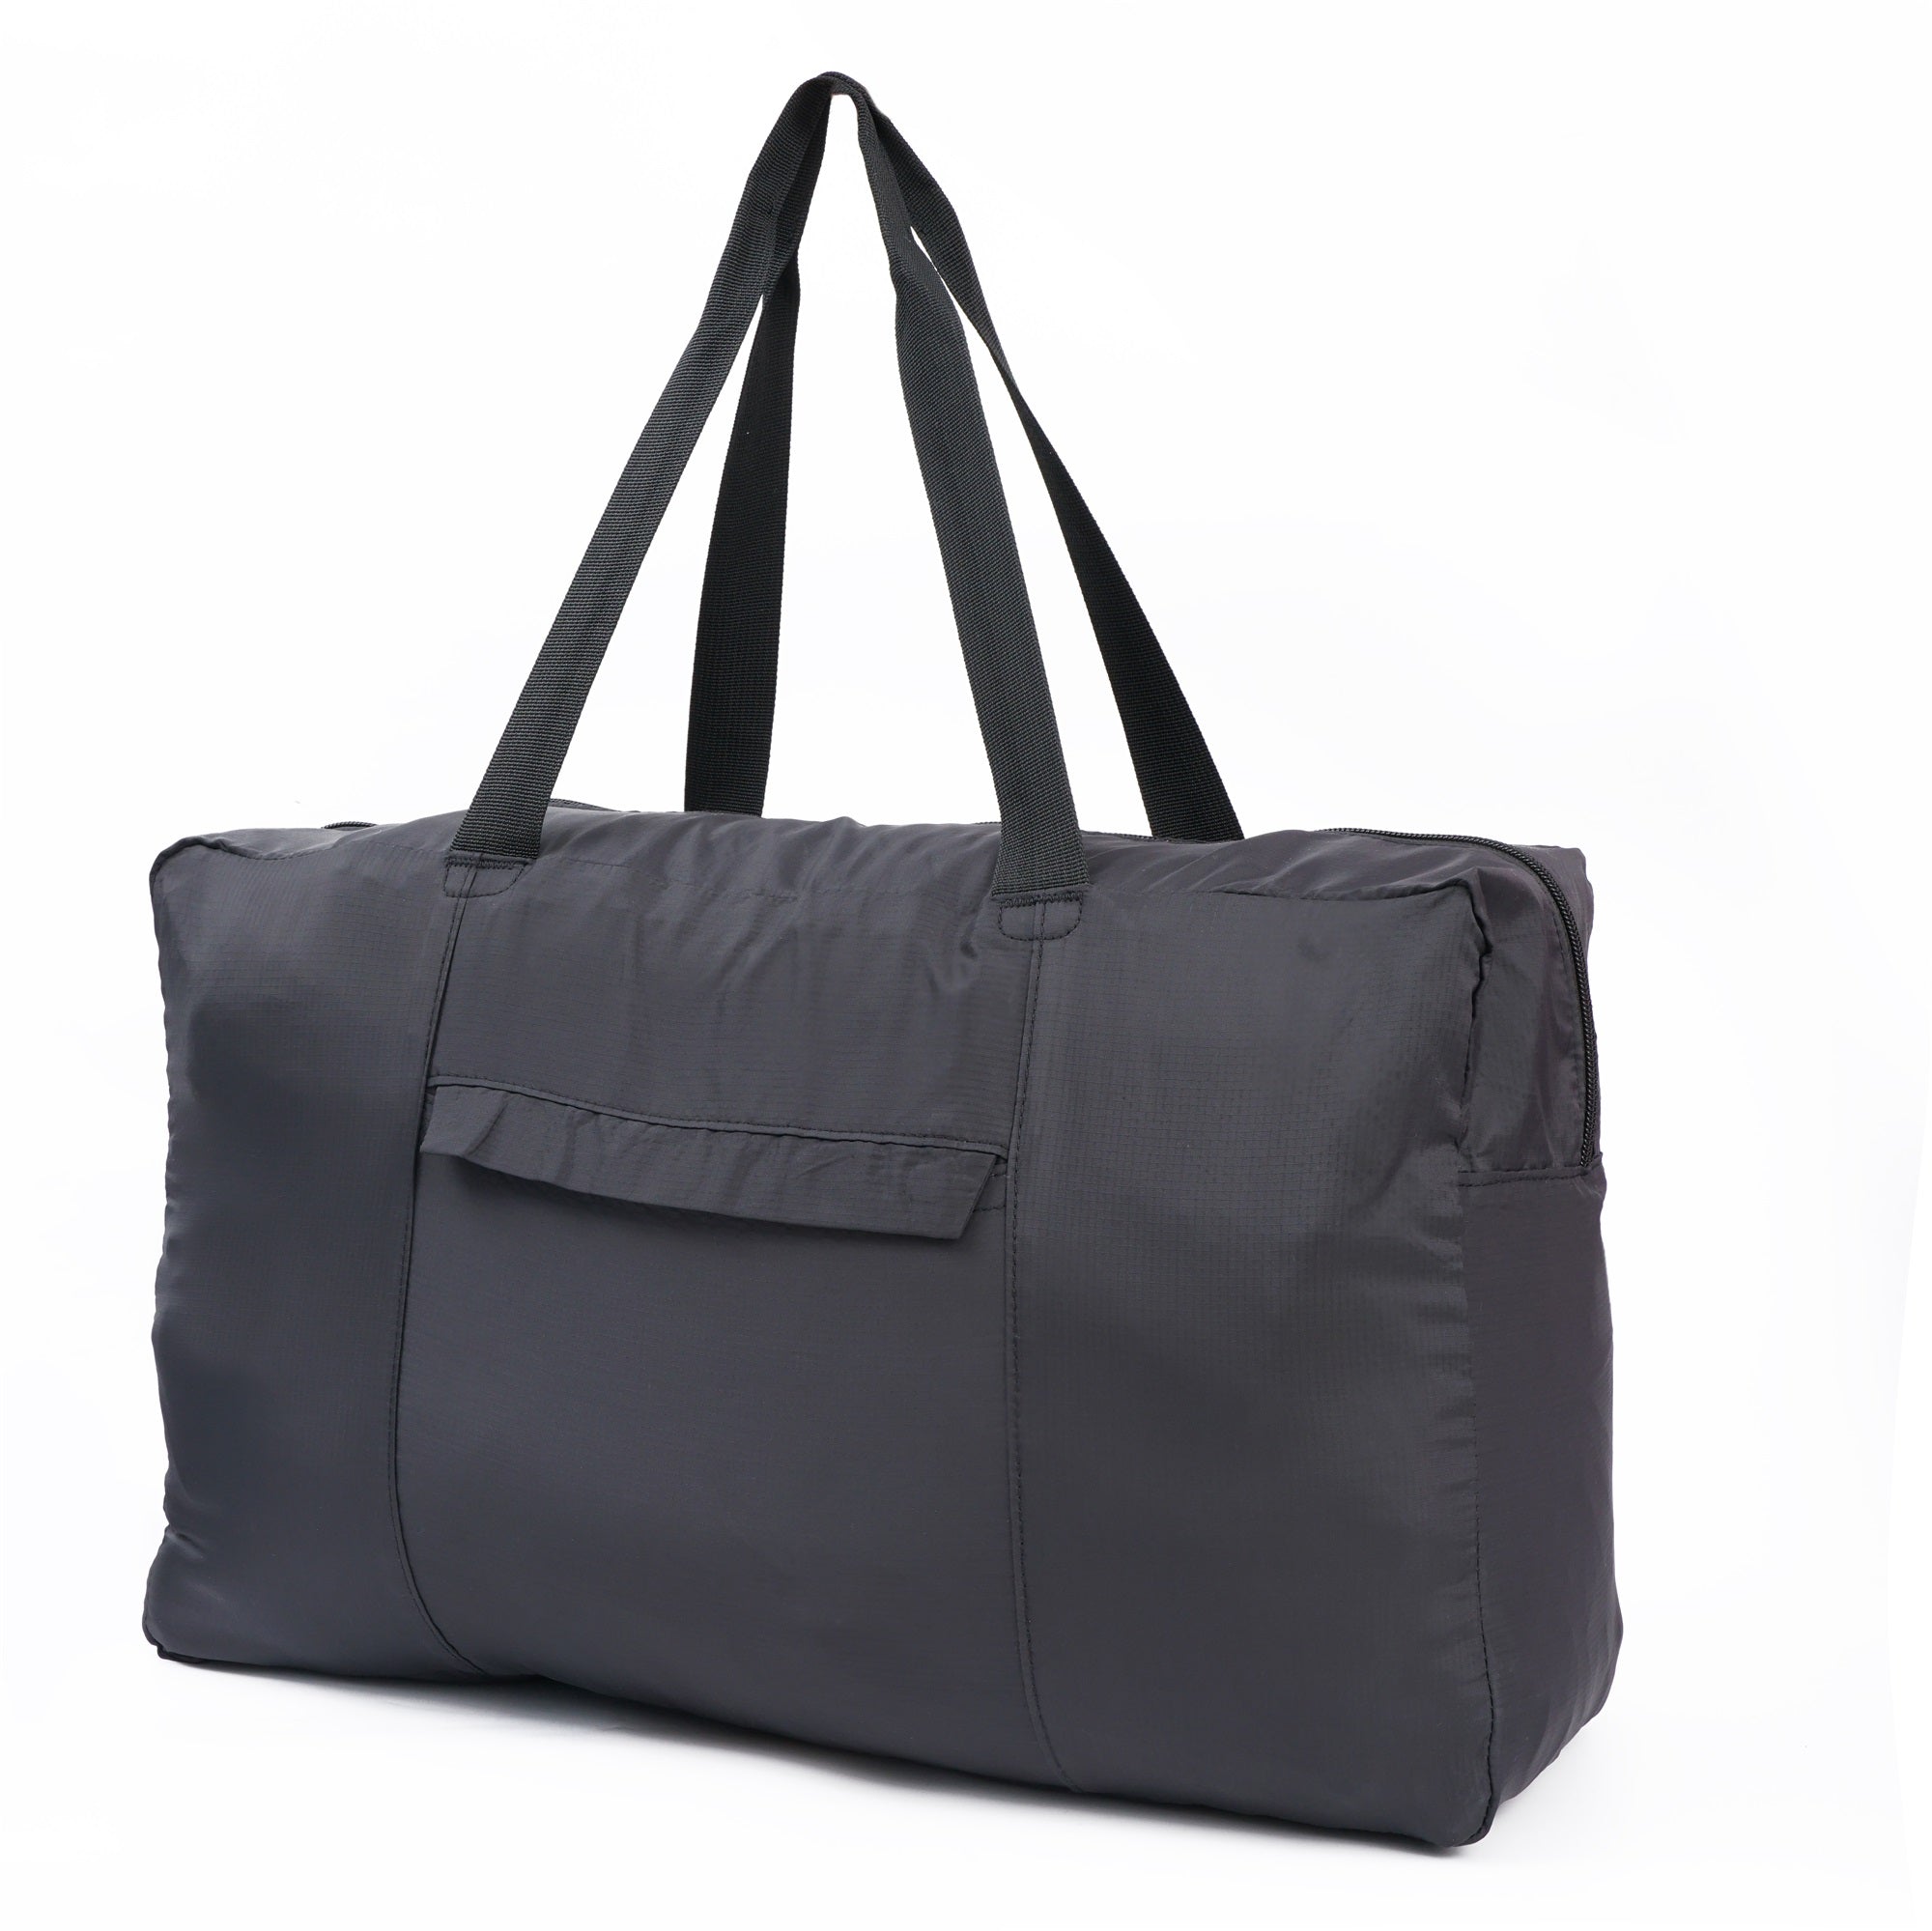 Black Foldable light weight travel bag